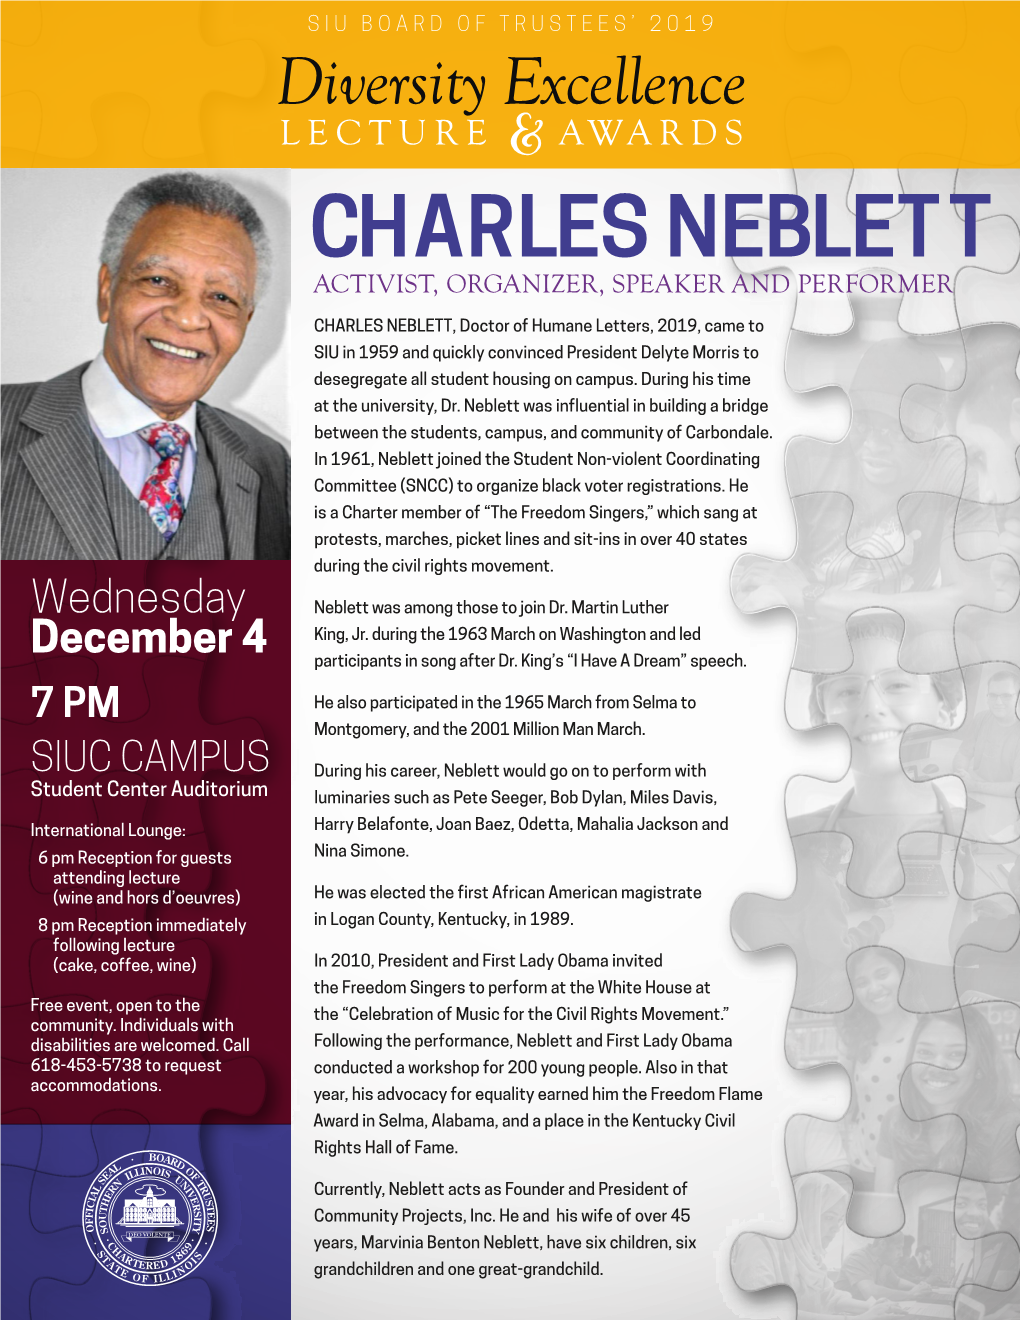 Charles Neblett Activist, Organizer, Speaker and Performer